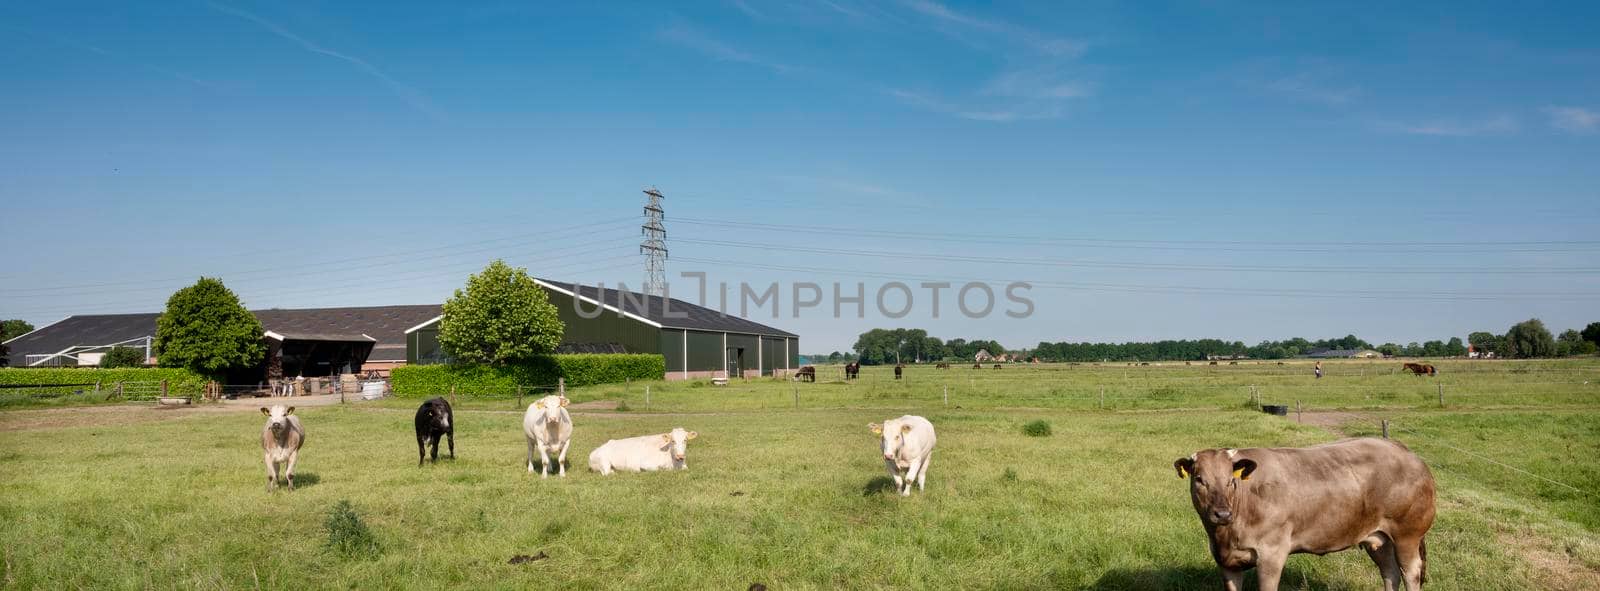 beef cows under blue summer sky in green grassy meadow in holland between nijmegen and arnhem near farm